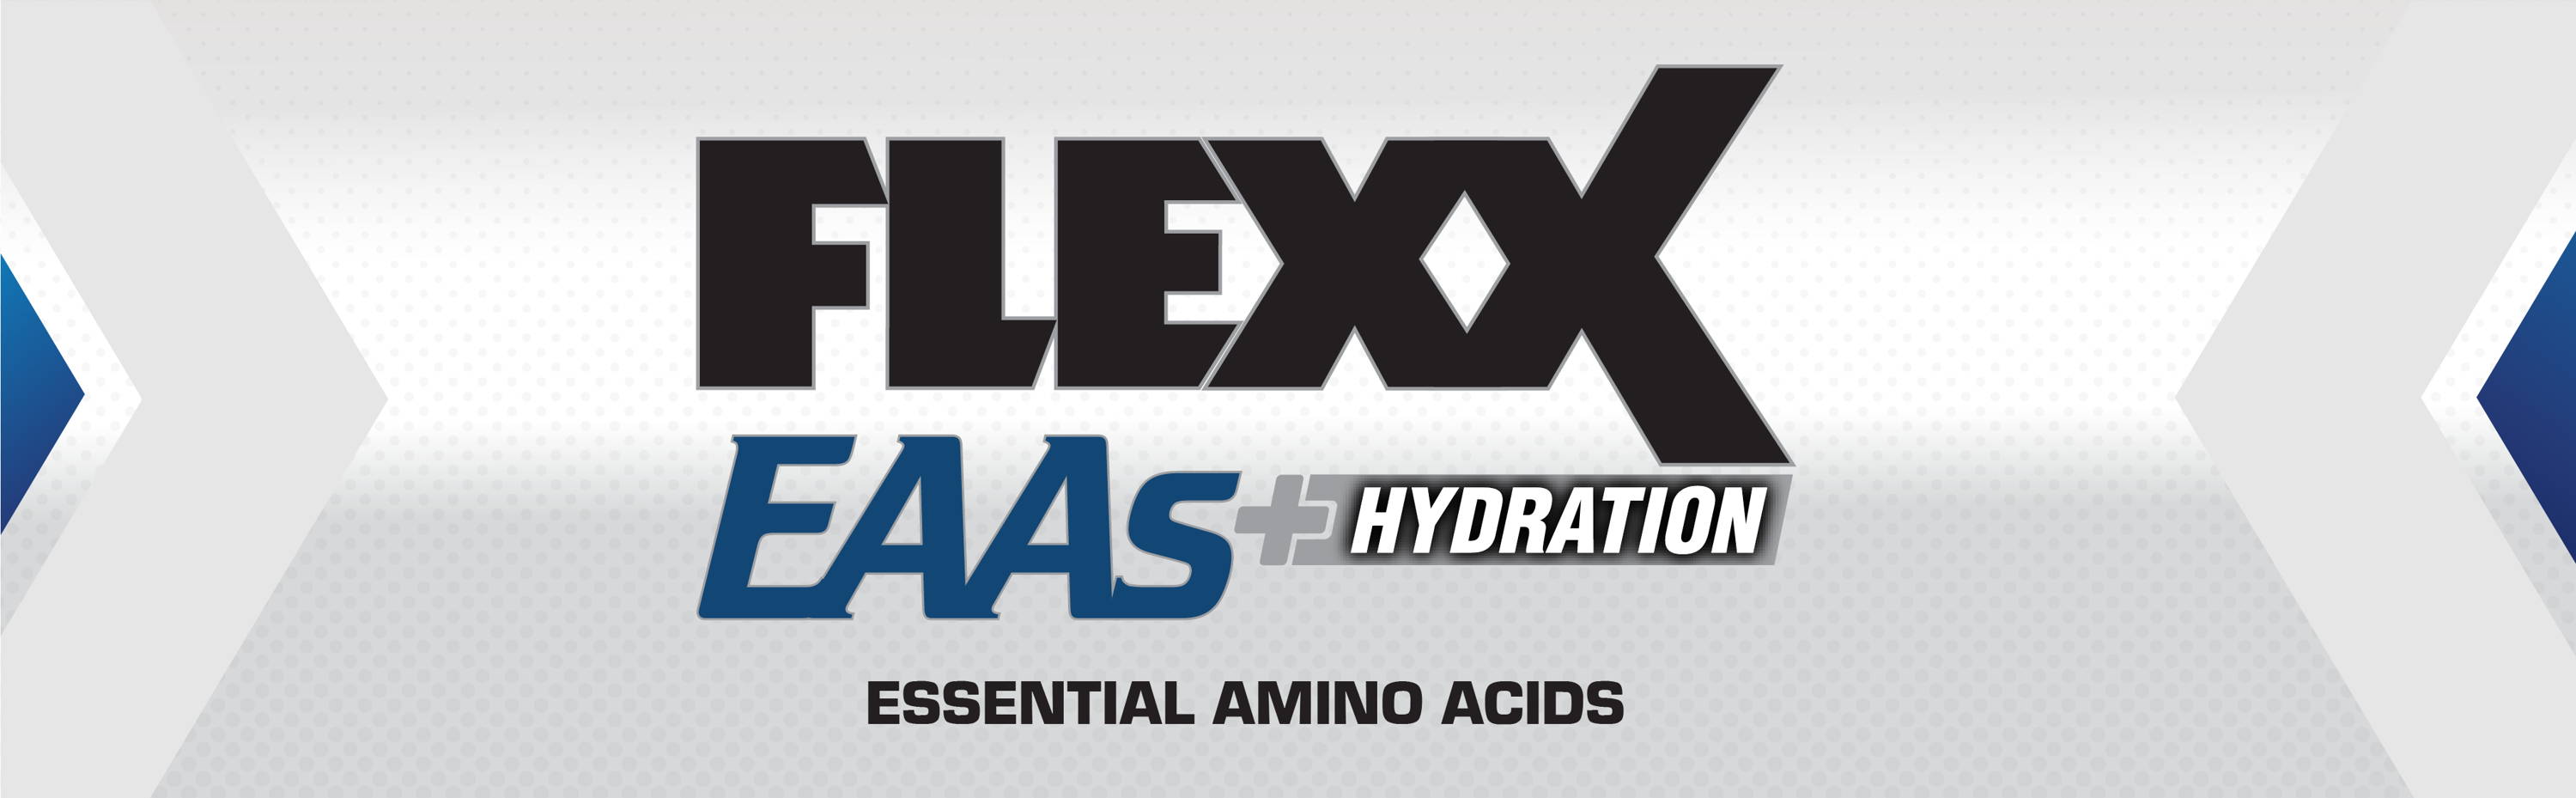 Flexx EAAs + Hydration - header image